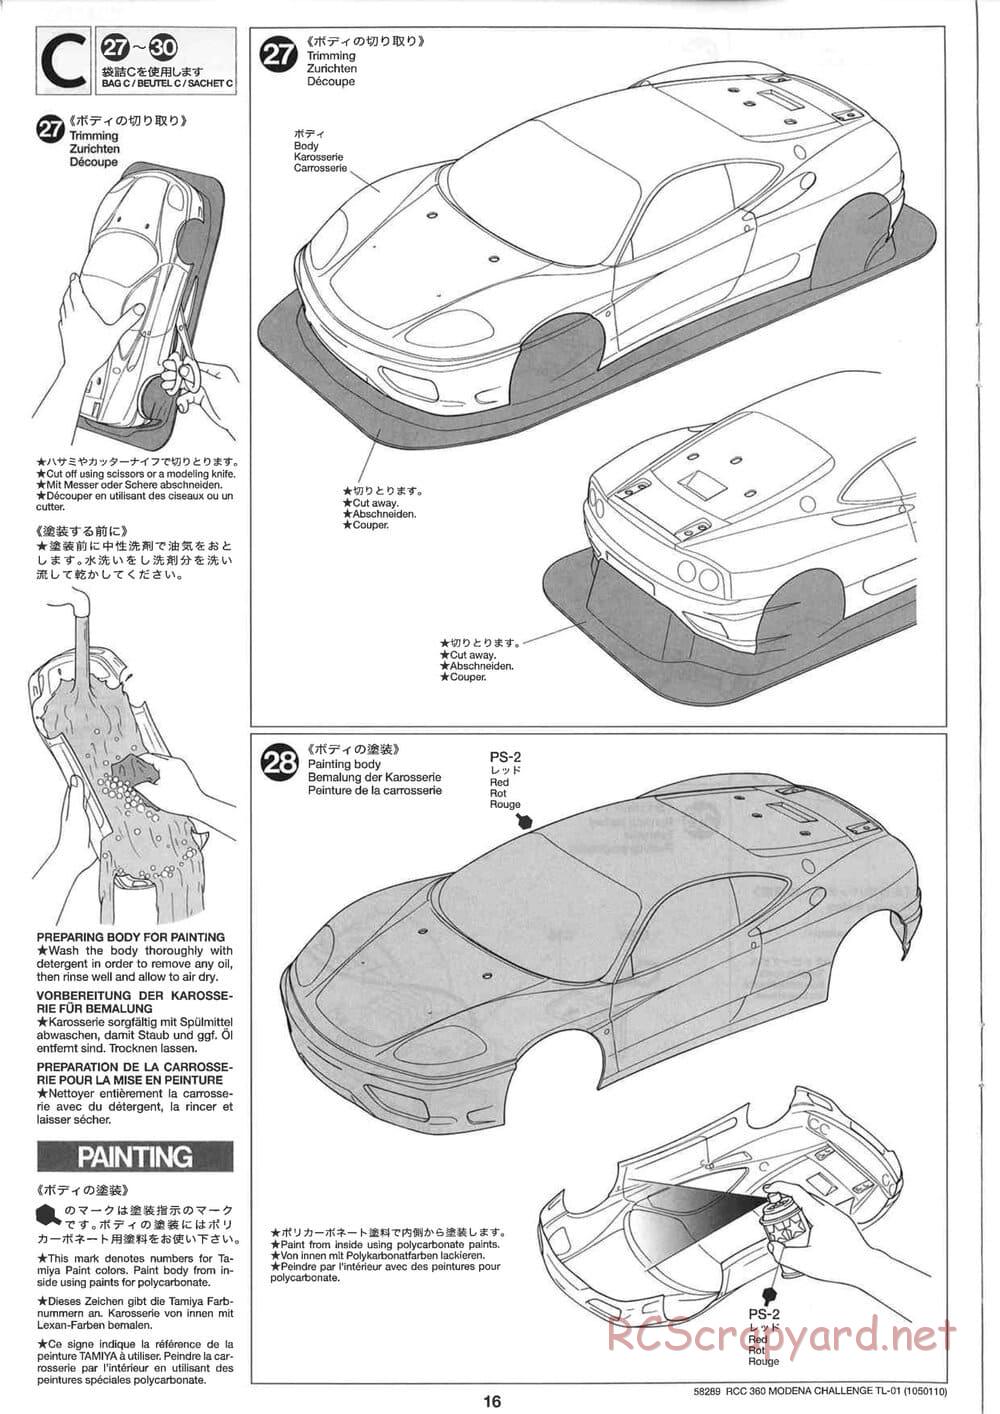 Tamiya - Ferrari 360 Modena Challenge - TL-01 Chassis - Manual - Page 16